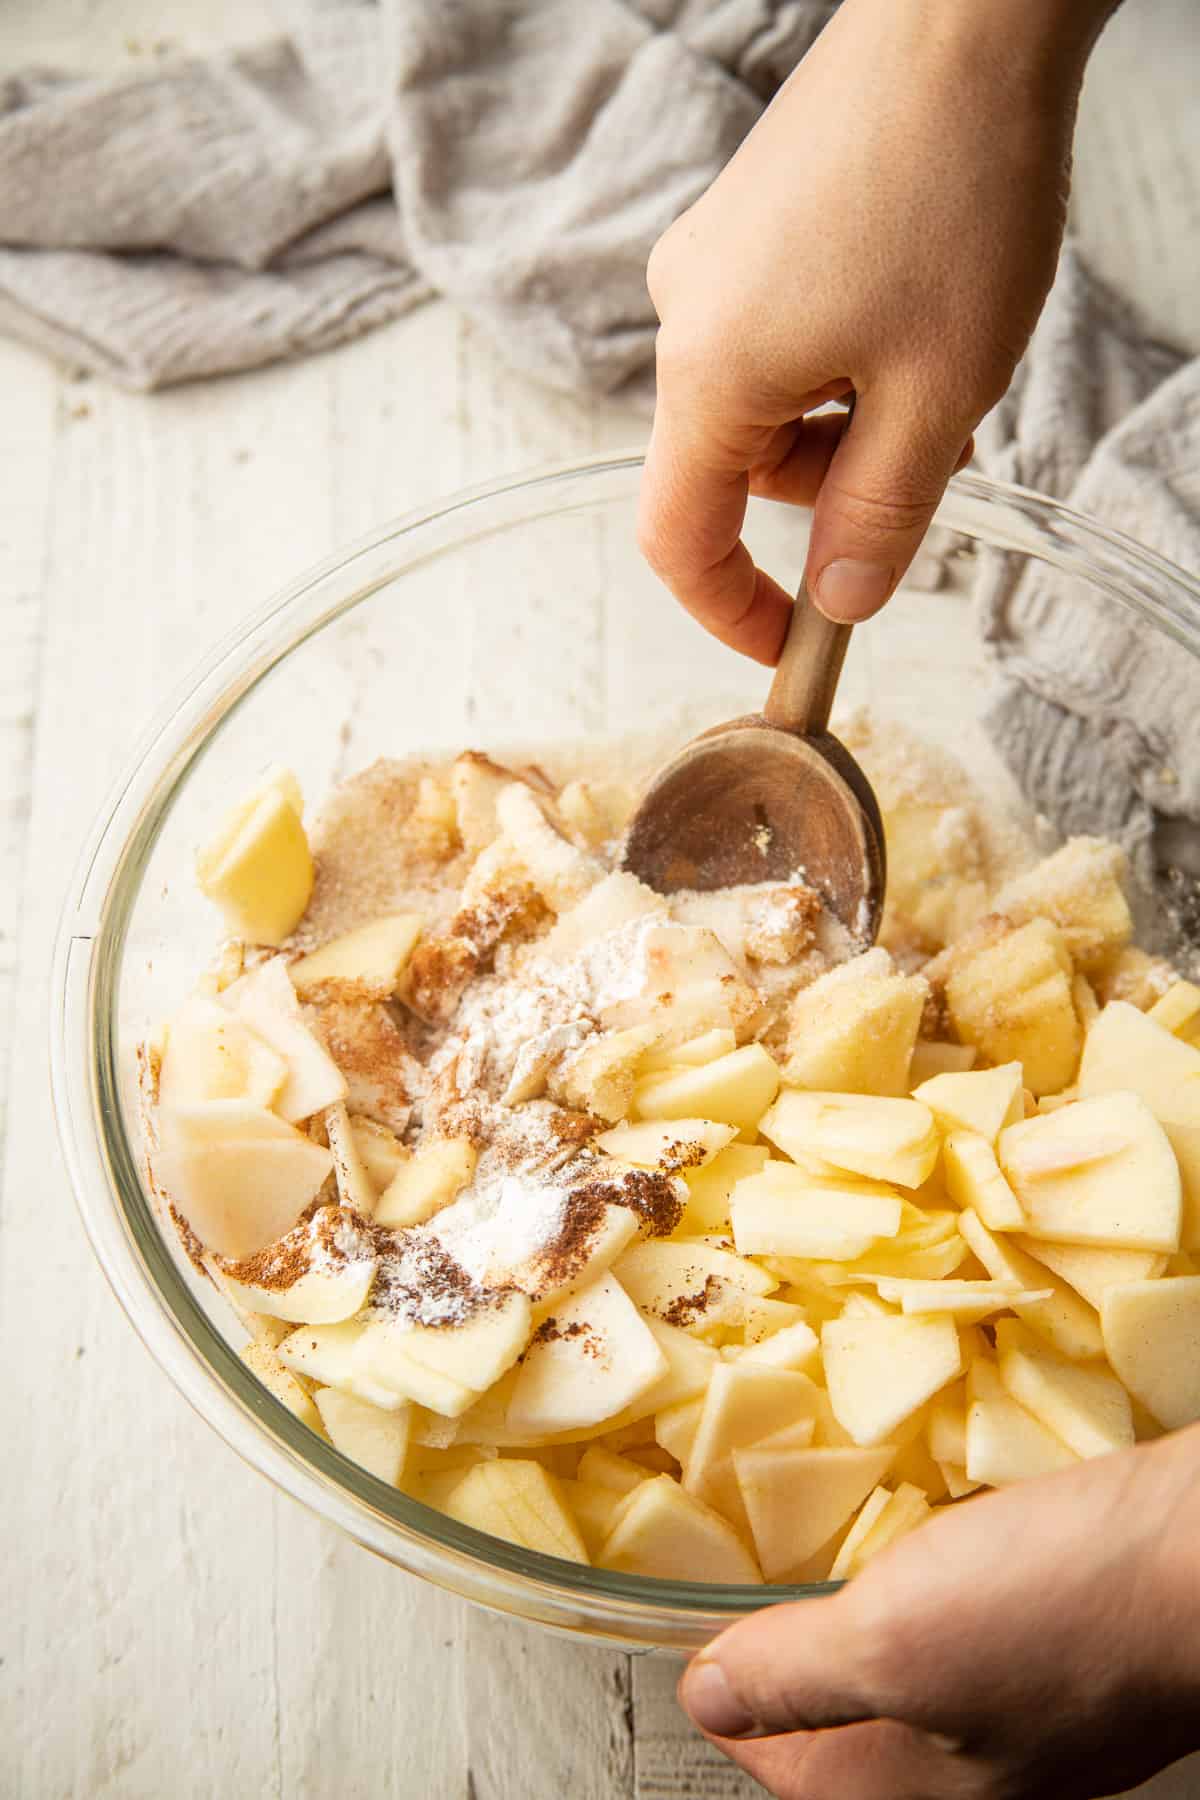 Hands stirring vegan apple pie filling together in a bowl.